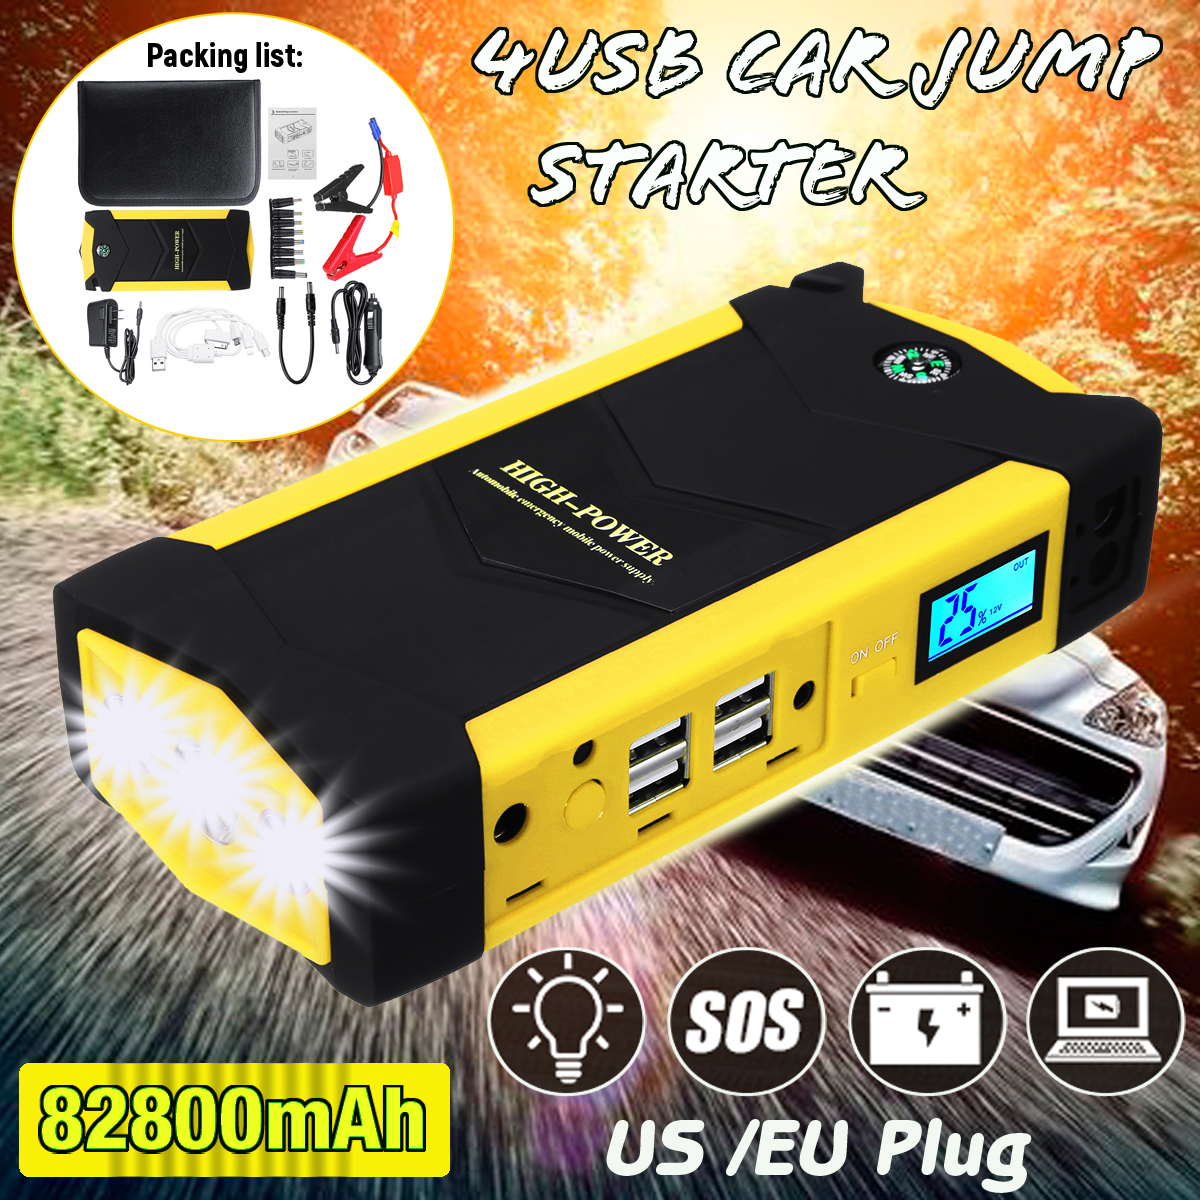 4USB Car Jump Starter 82800mAh Jump Starter Battery Pack Portable Boaster Power Bank Dual Start